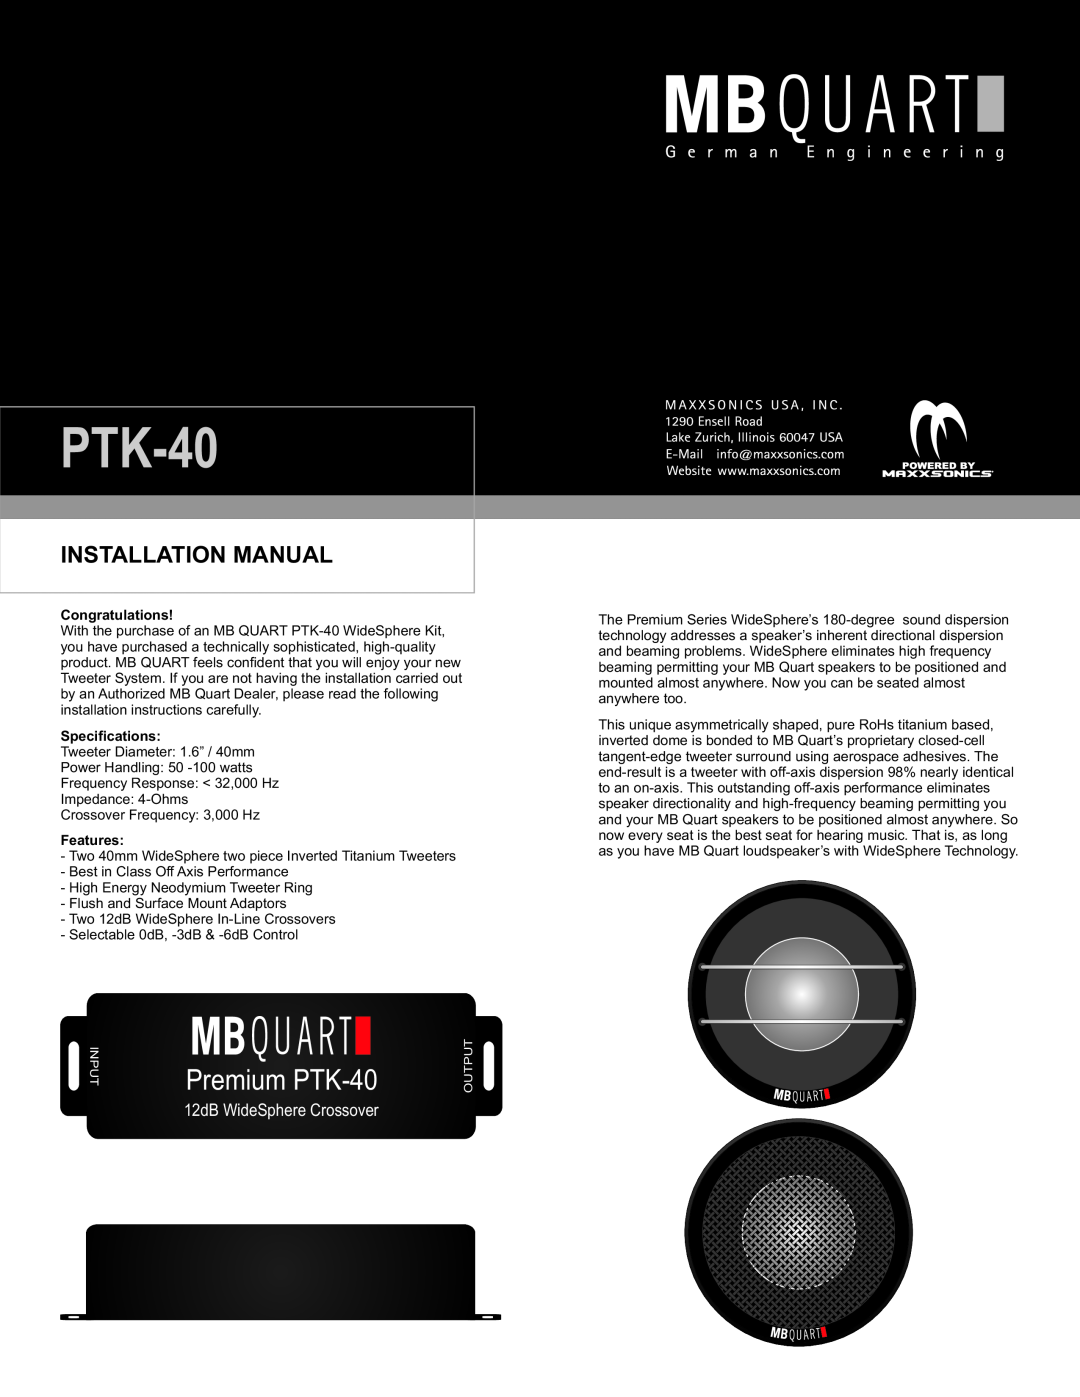 MB QUART installation manual Installation Manual, Congratulations, Specifications, Features, Premium PTK-40 